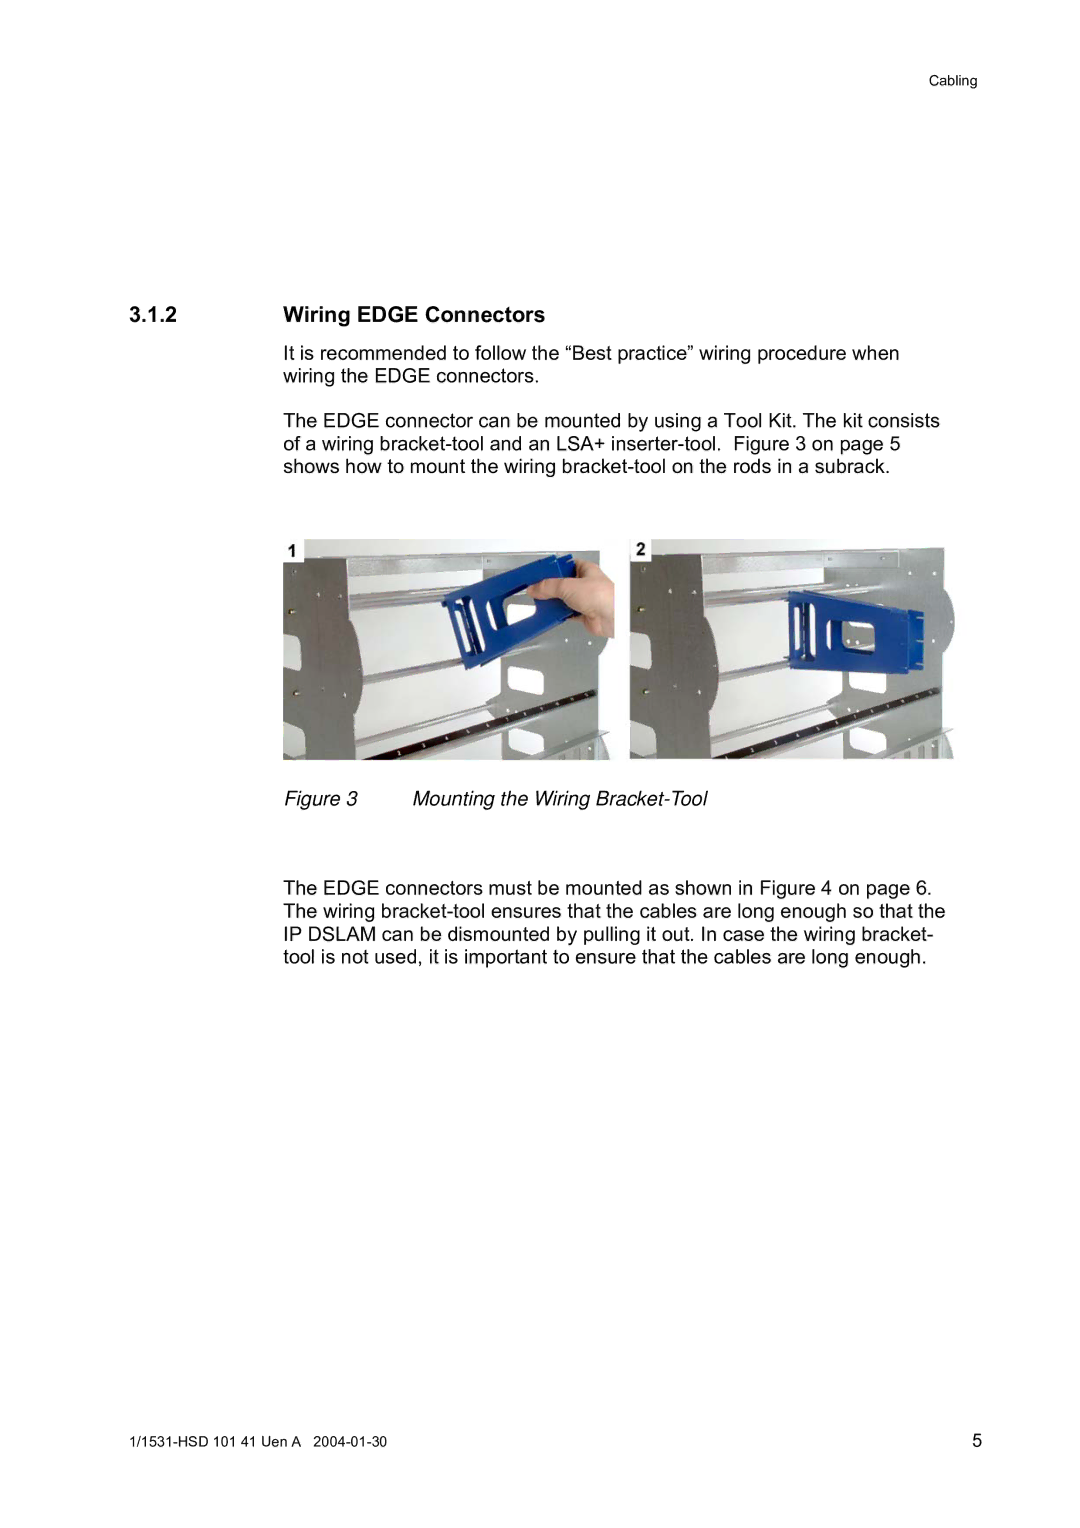 Ericsson EDN312, IP DSLAM manual Wiring Edge Connectors 